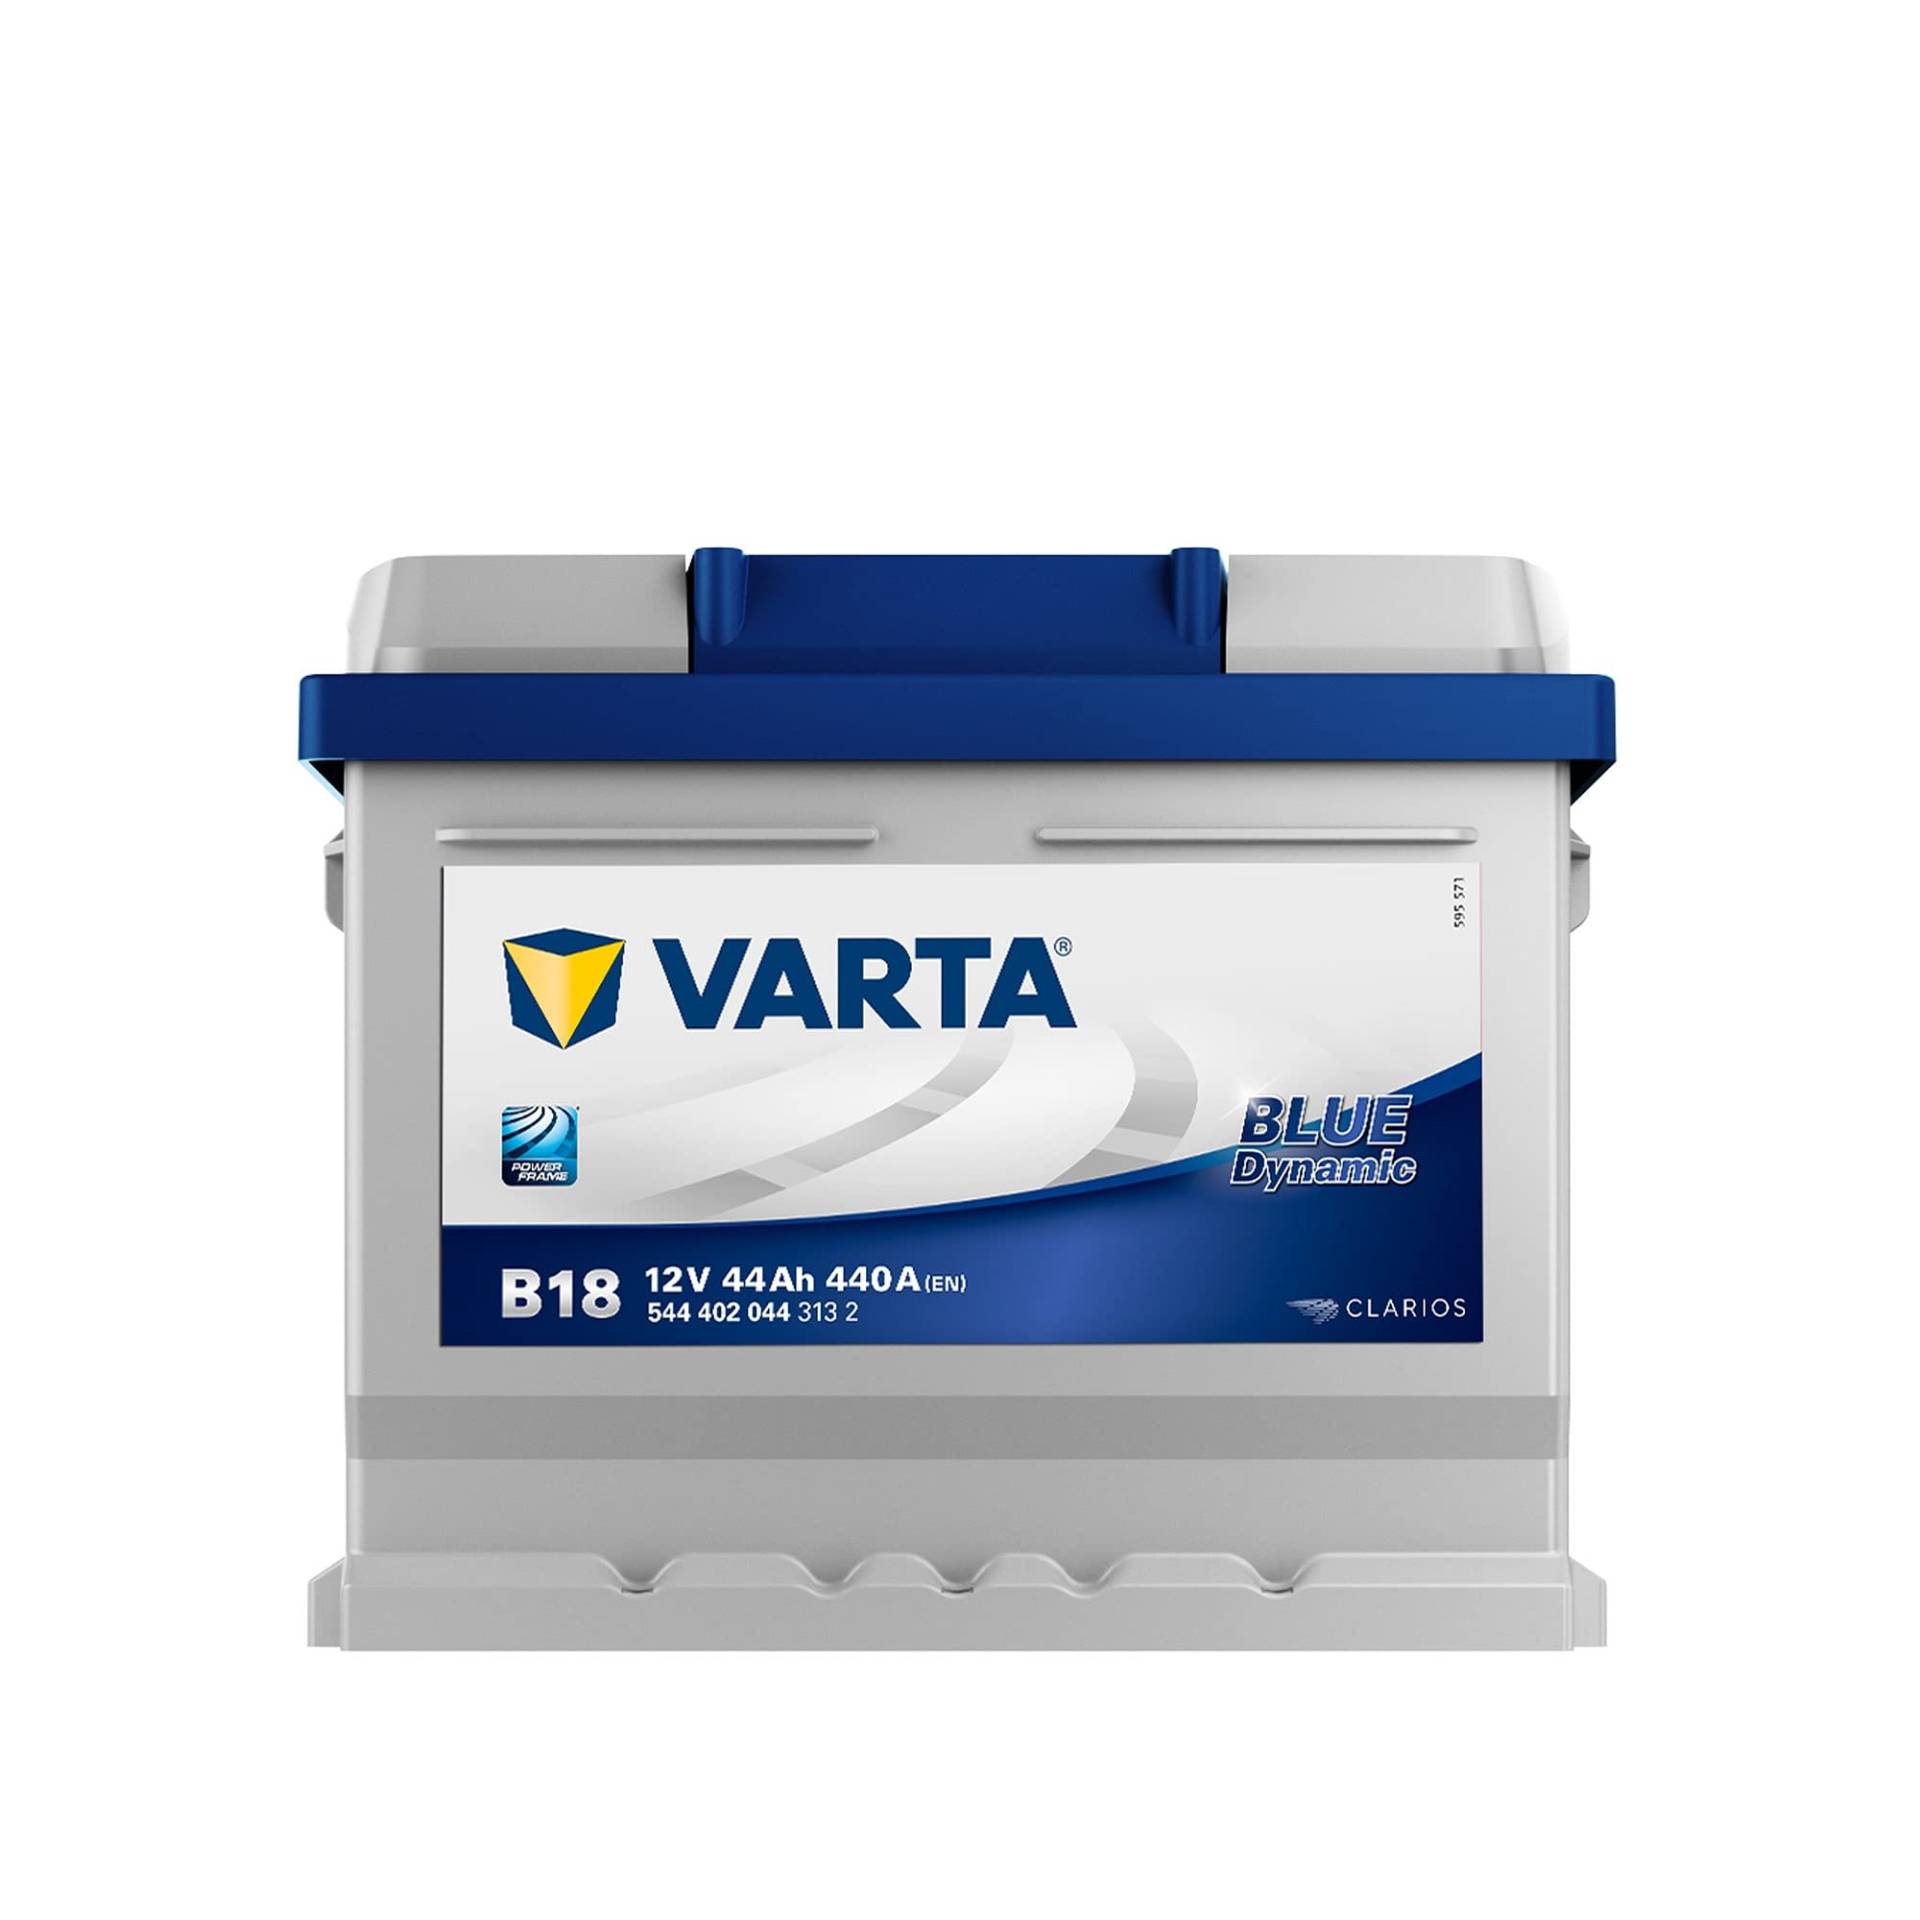 Varta lead acid, B18 Autobatterie 58344 Blue Dynamic, 12V, 44 Ah, 440 A von JCKEL